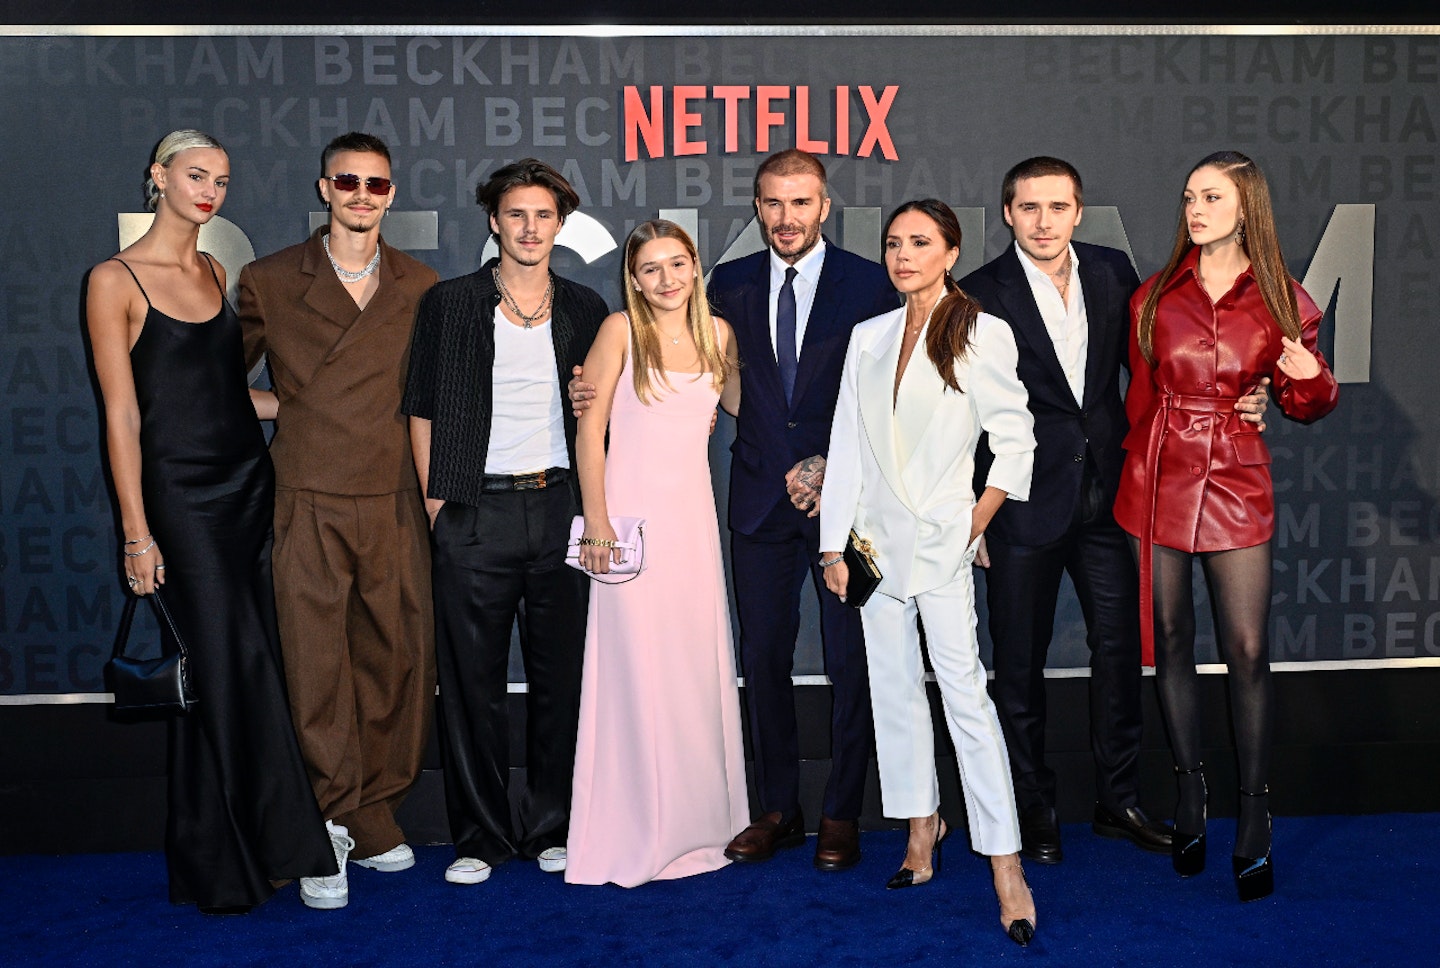 The Beckham family and Nicola Peltz